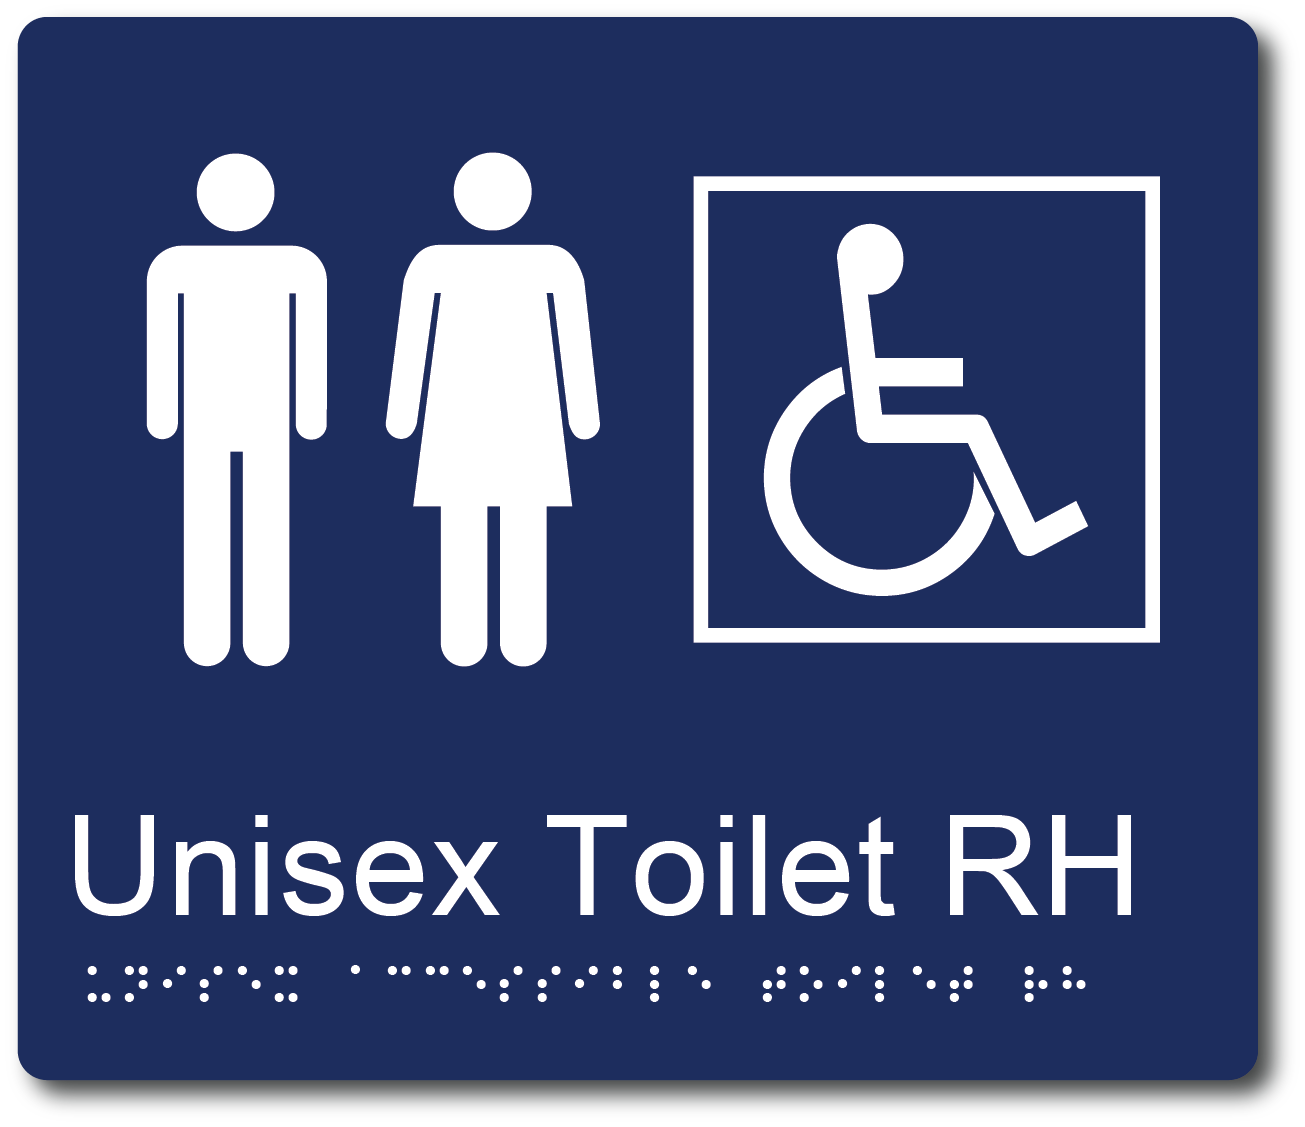 Unisex Toilet RH